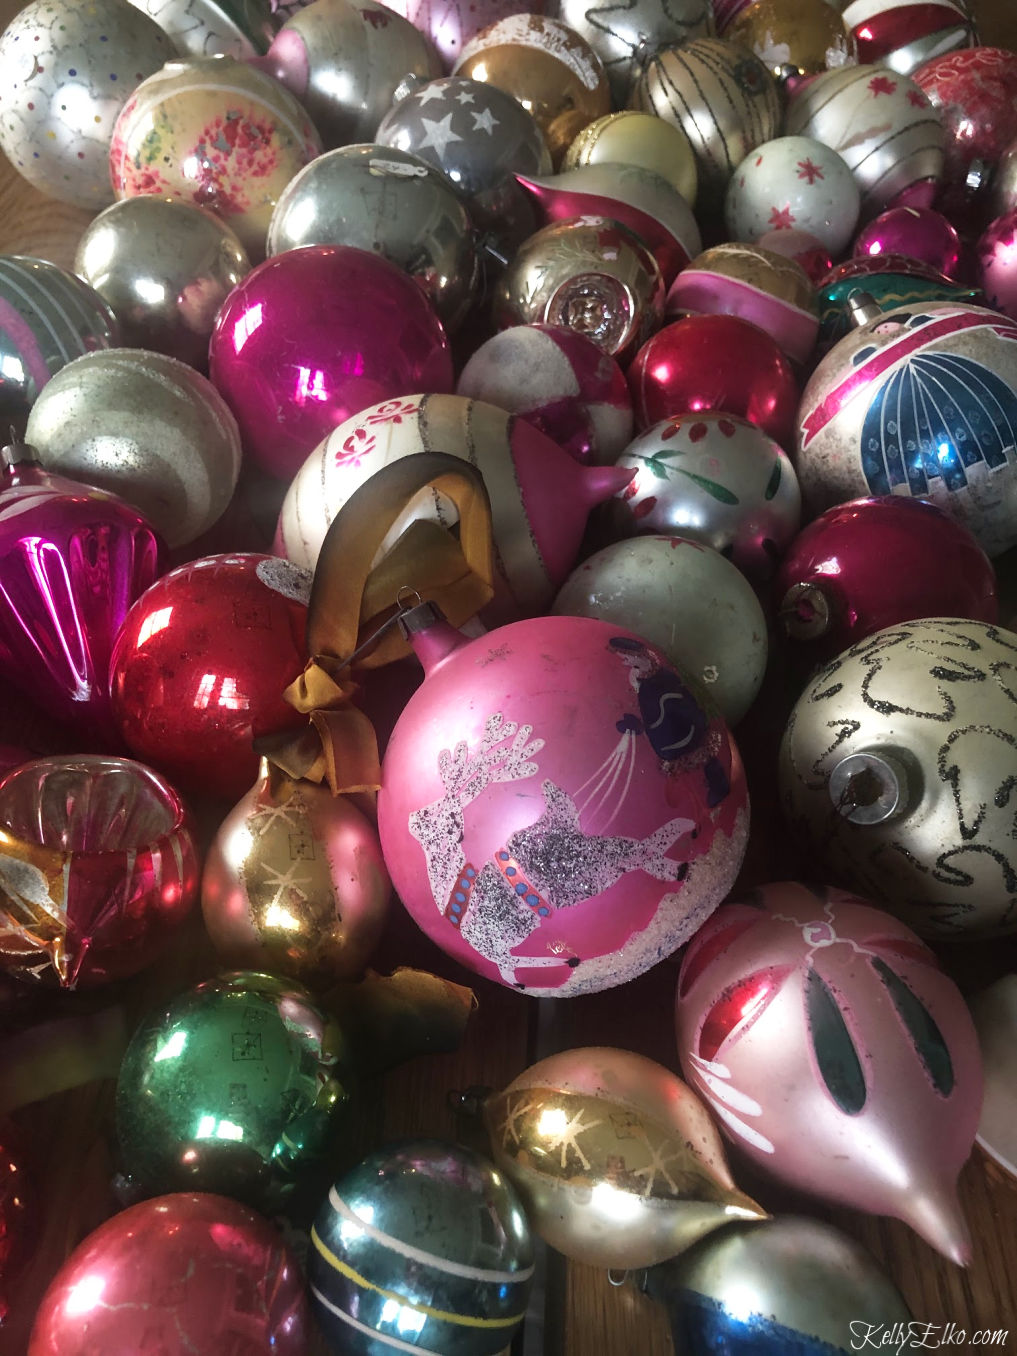 Huge vintage collection of Shiny Brite Christmas ornaments kellyelko.com #shinybrite #vintageornaments #vintagechristmas #vintagecollection #christmasornaments #christmasdecor 